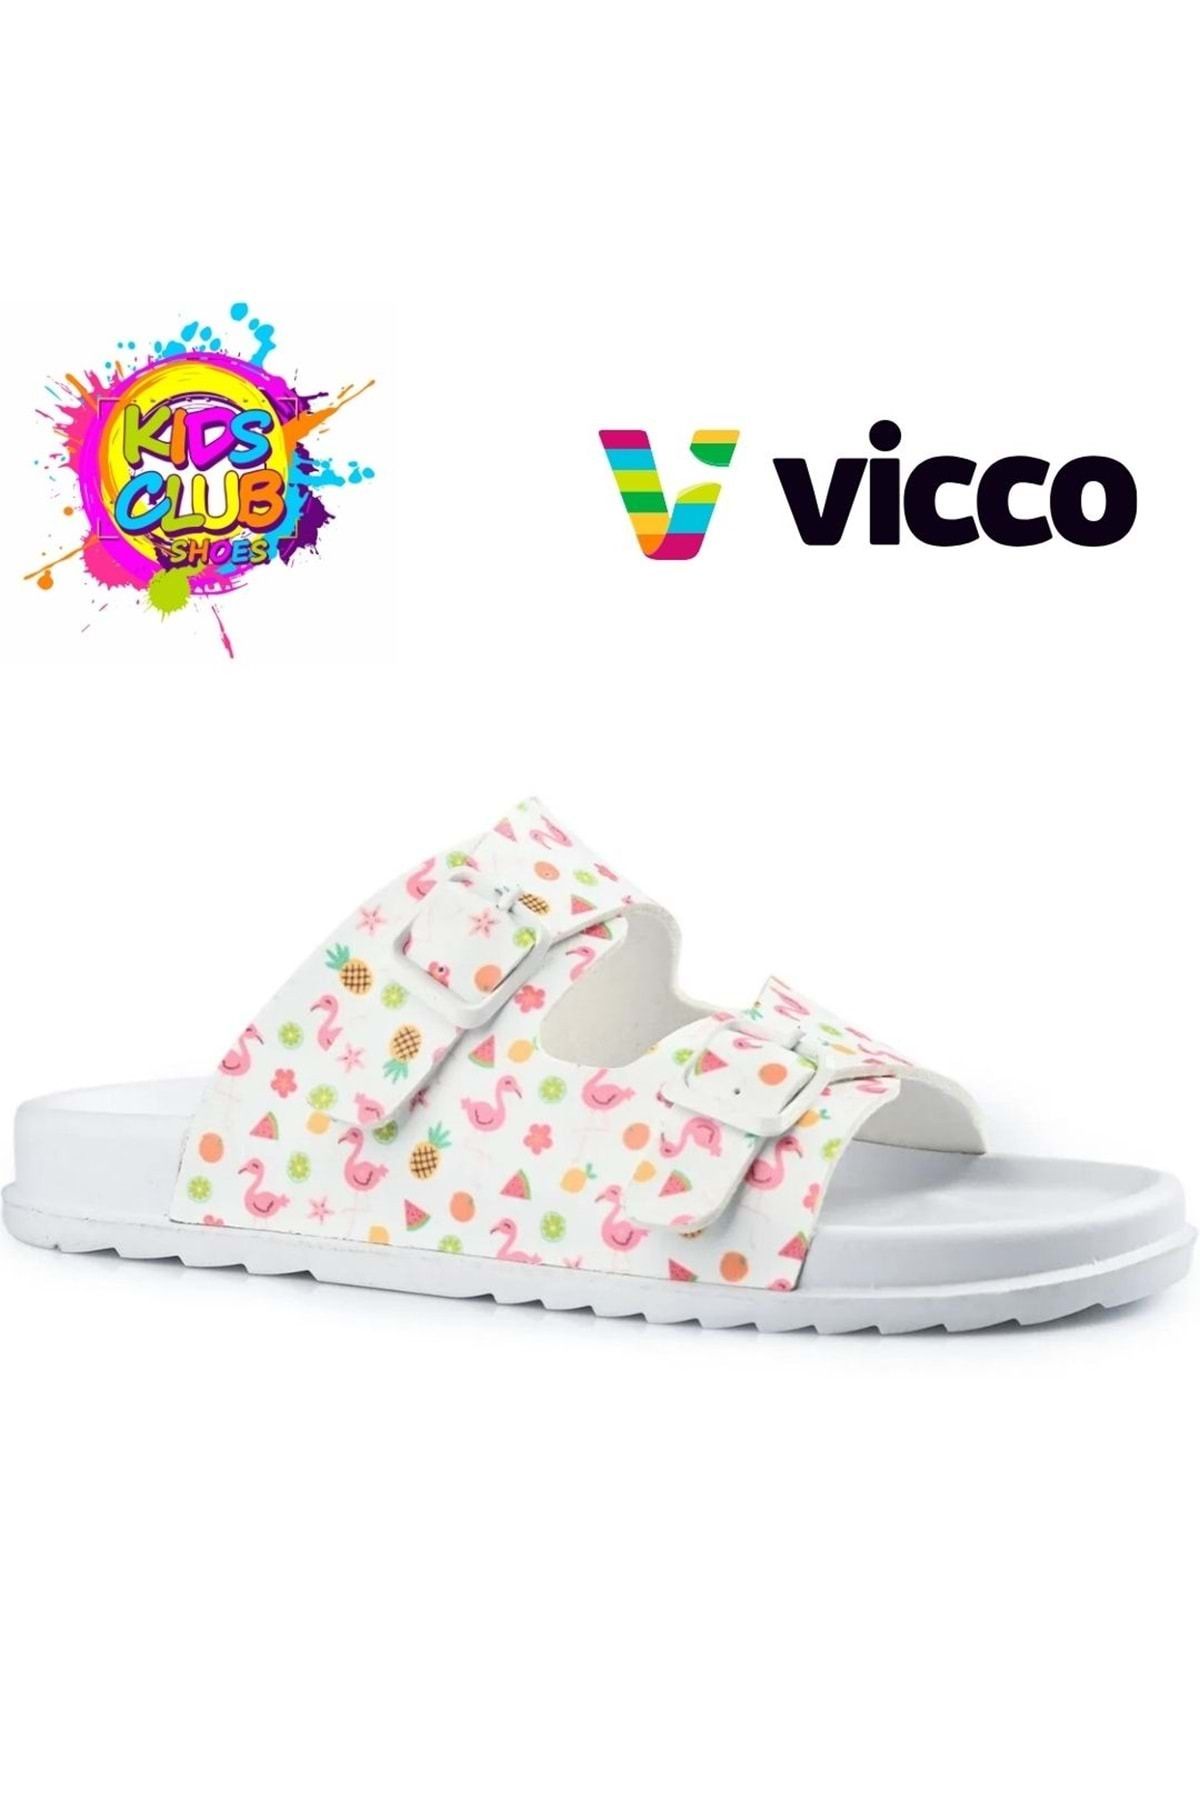 Kids Club Shoes Vicco Gibili II Ortopedik Çocuk Sandalet Terlik BEYAZ